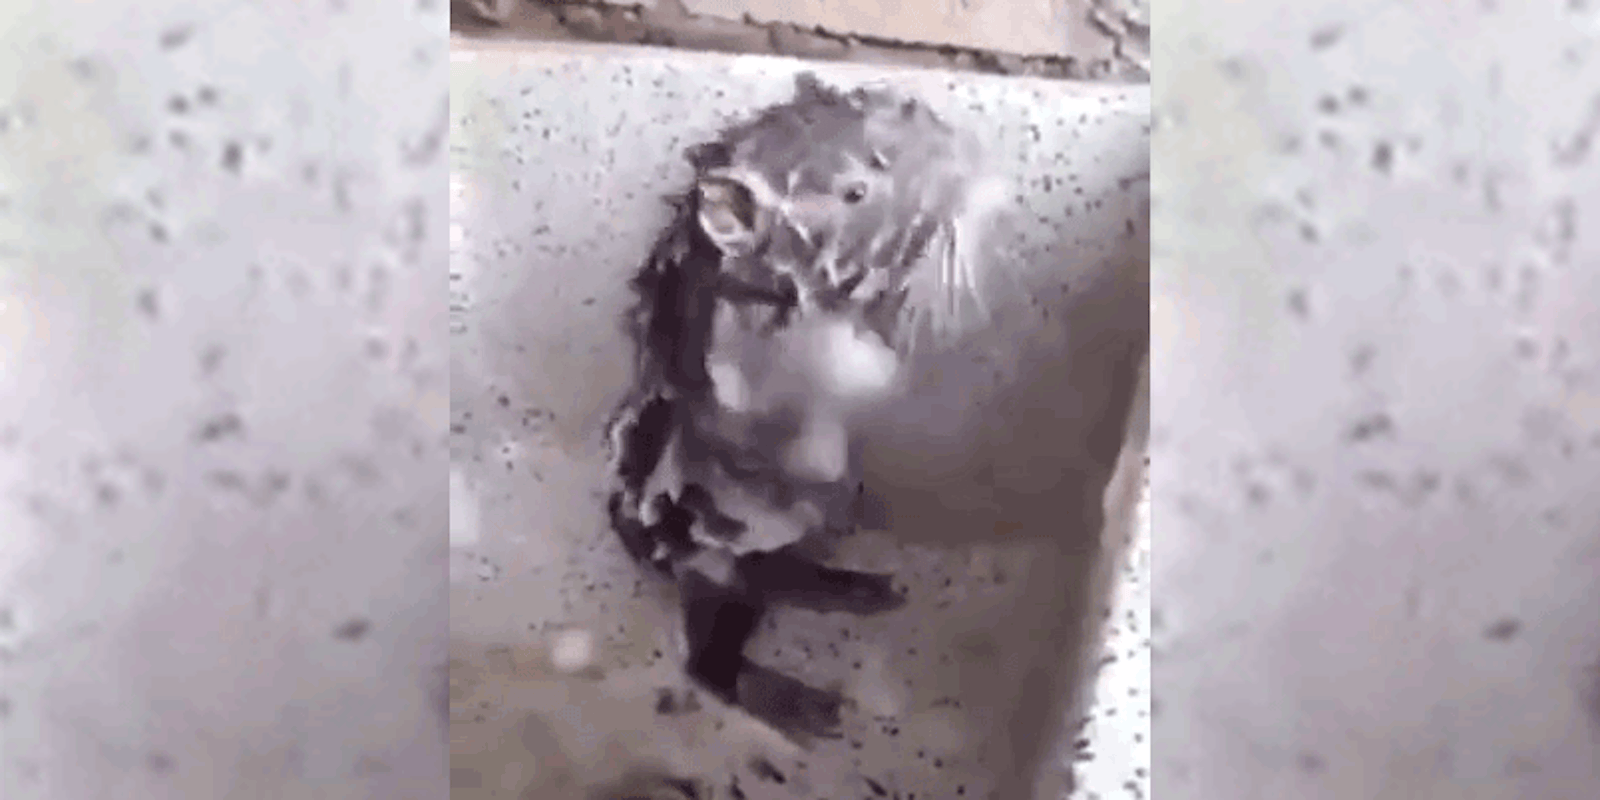 shower rat video : Rat taking a shower